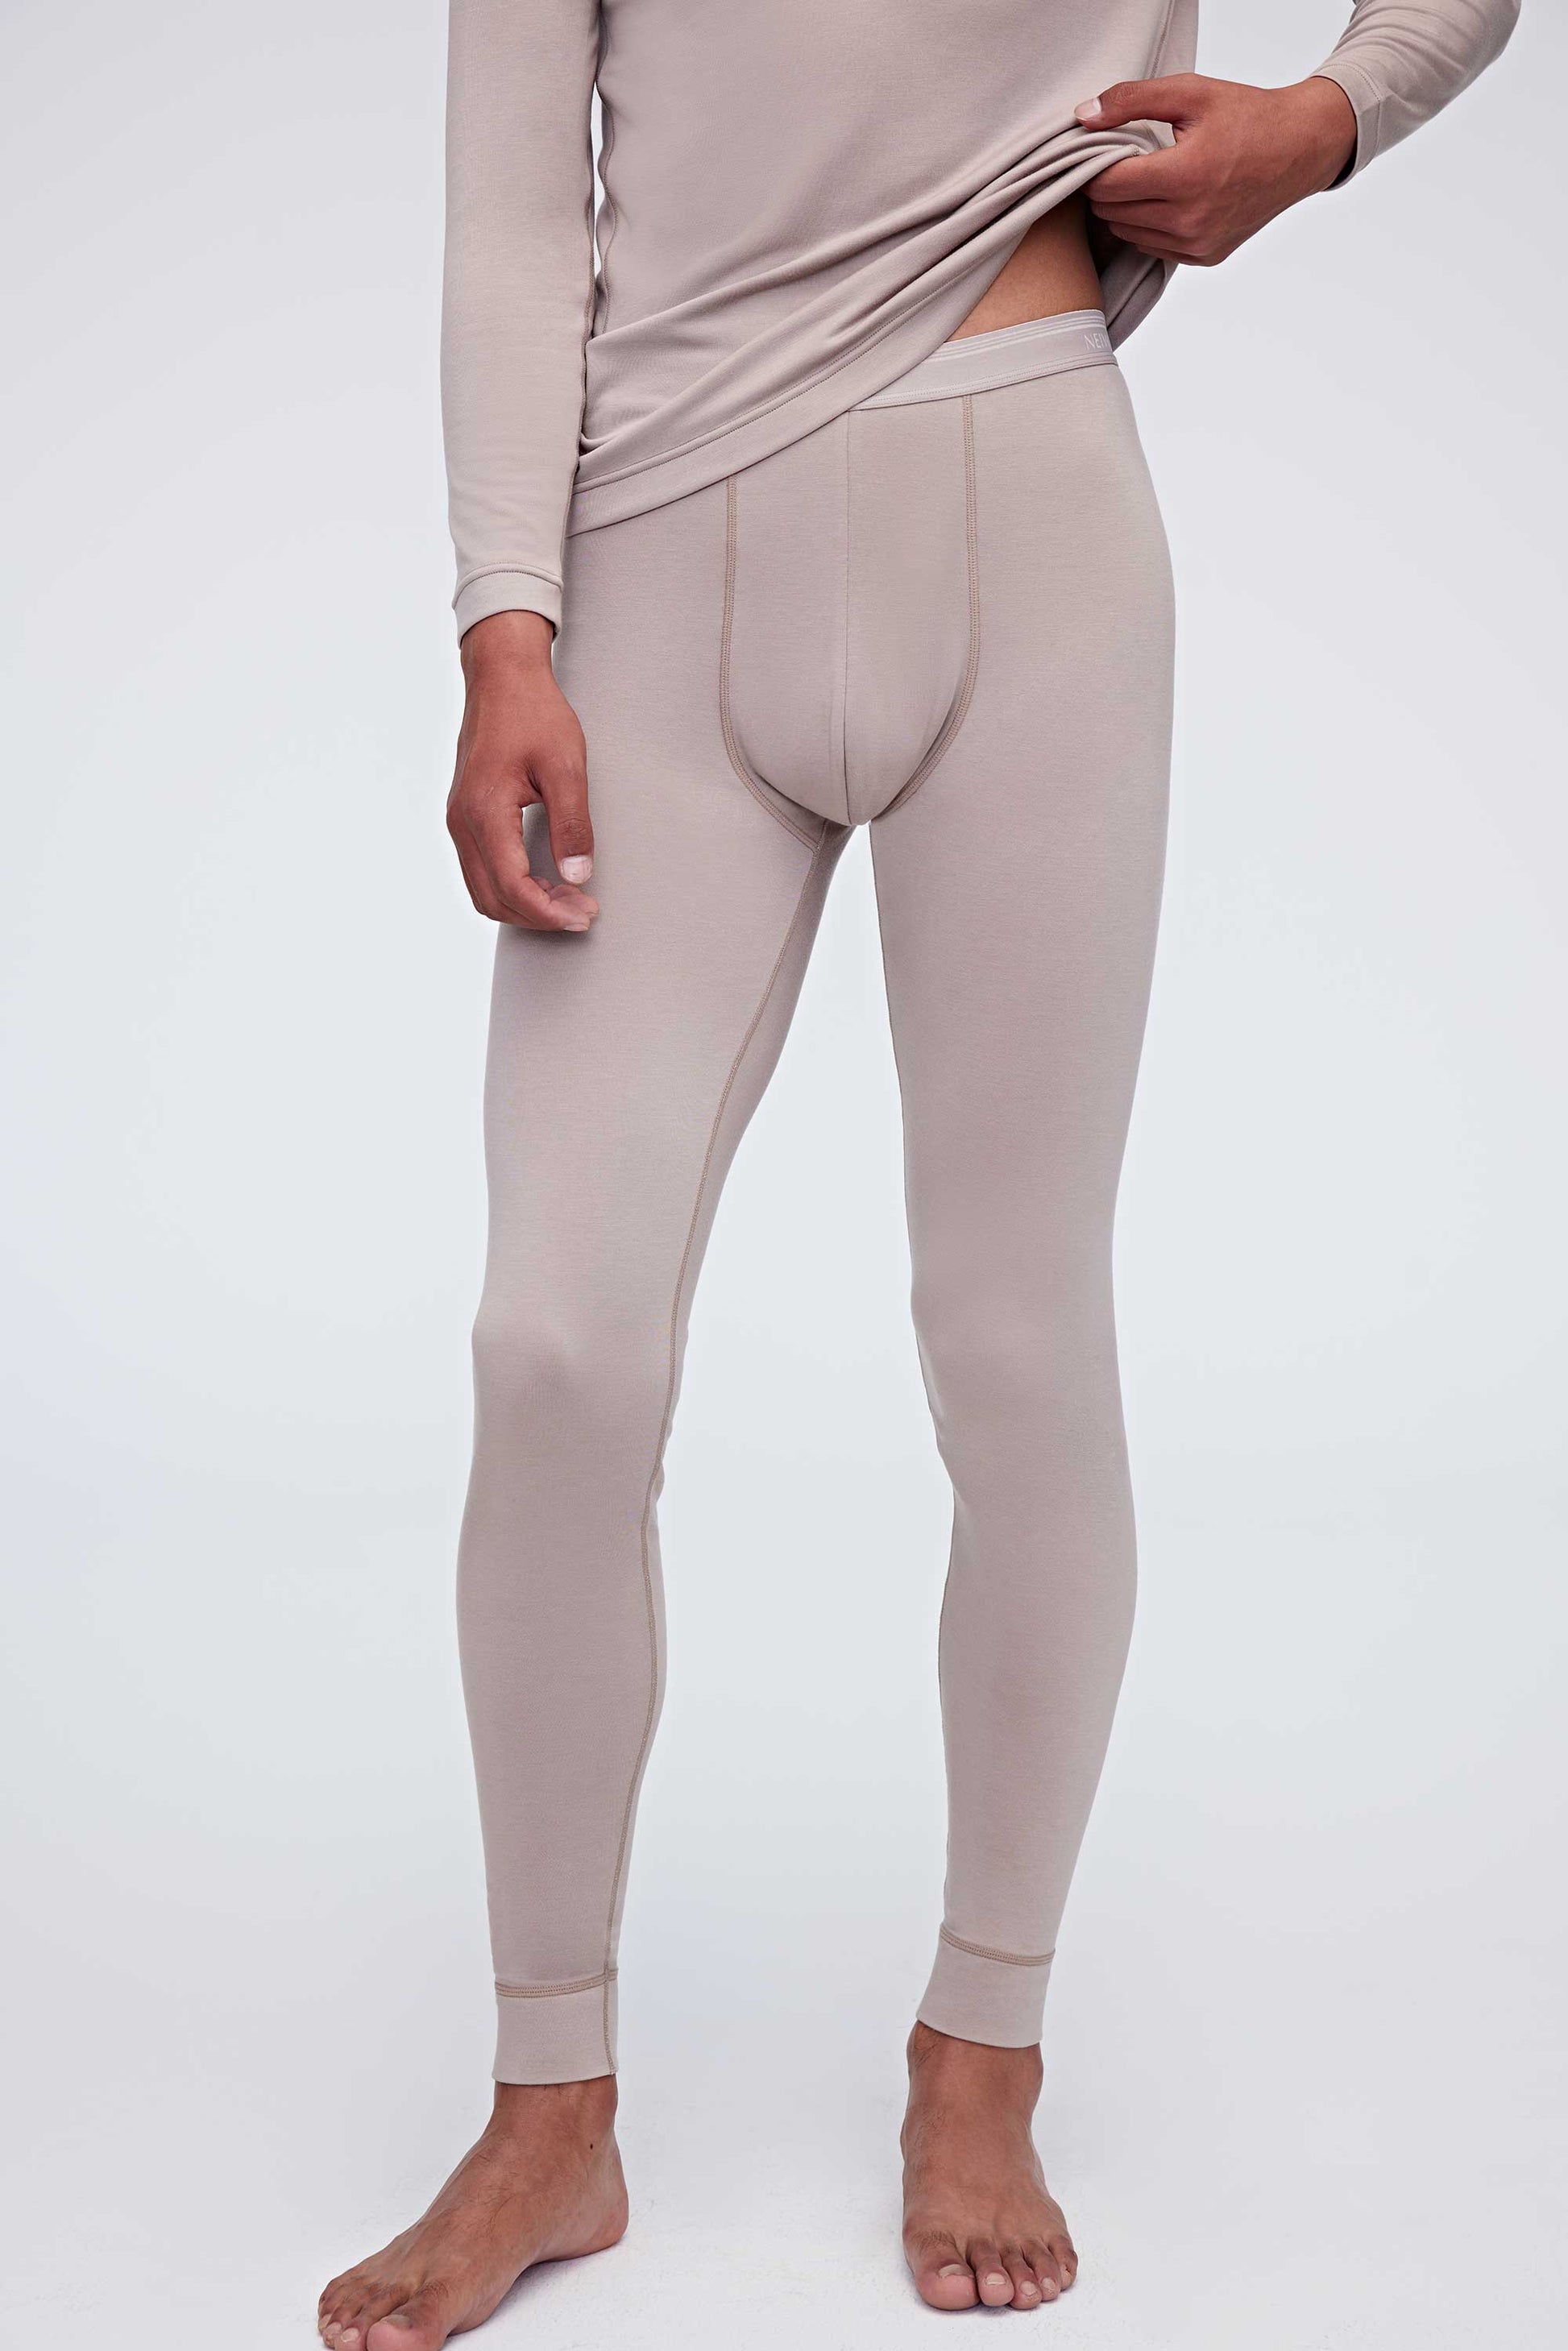 a ginger gray thermal pants